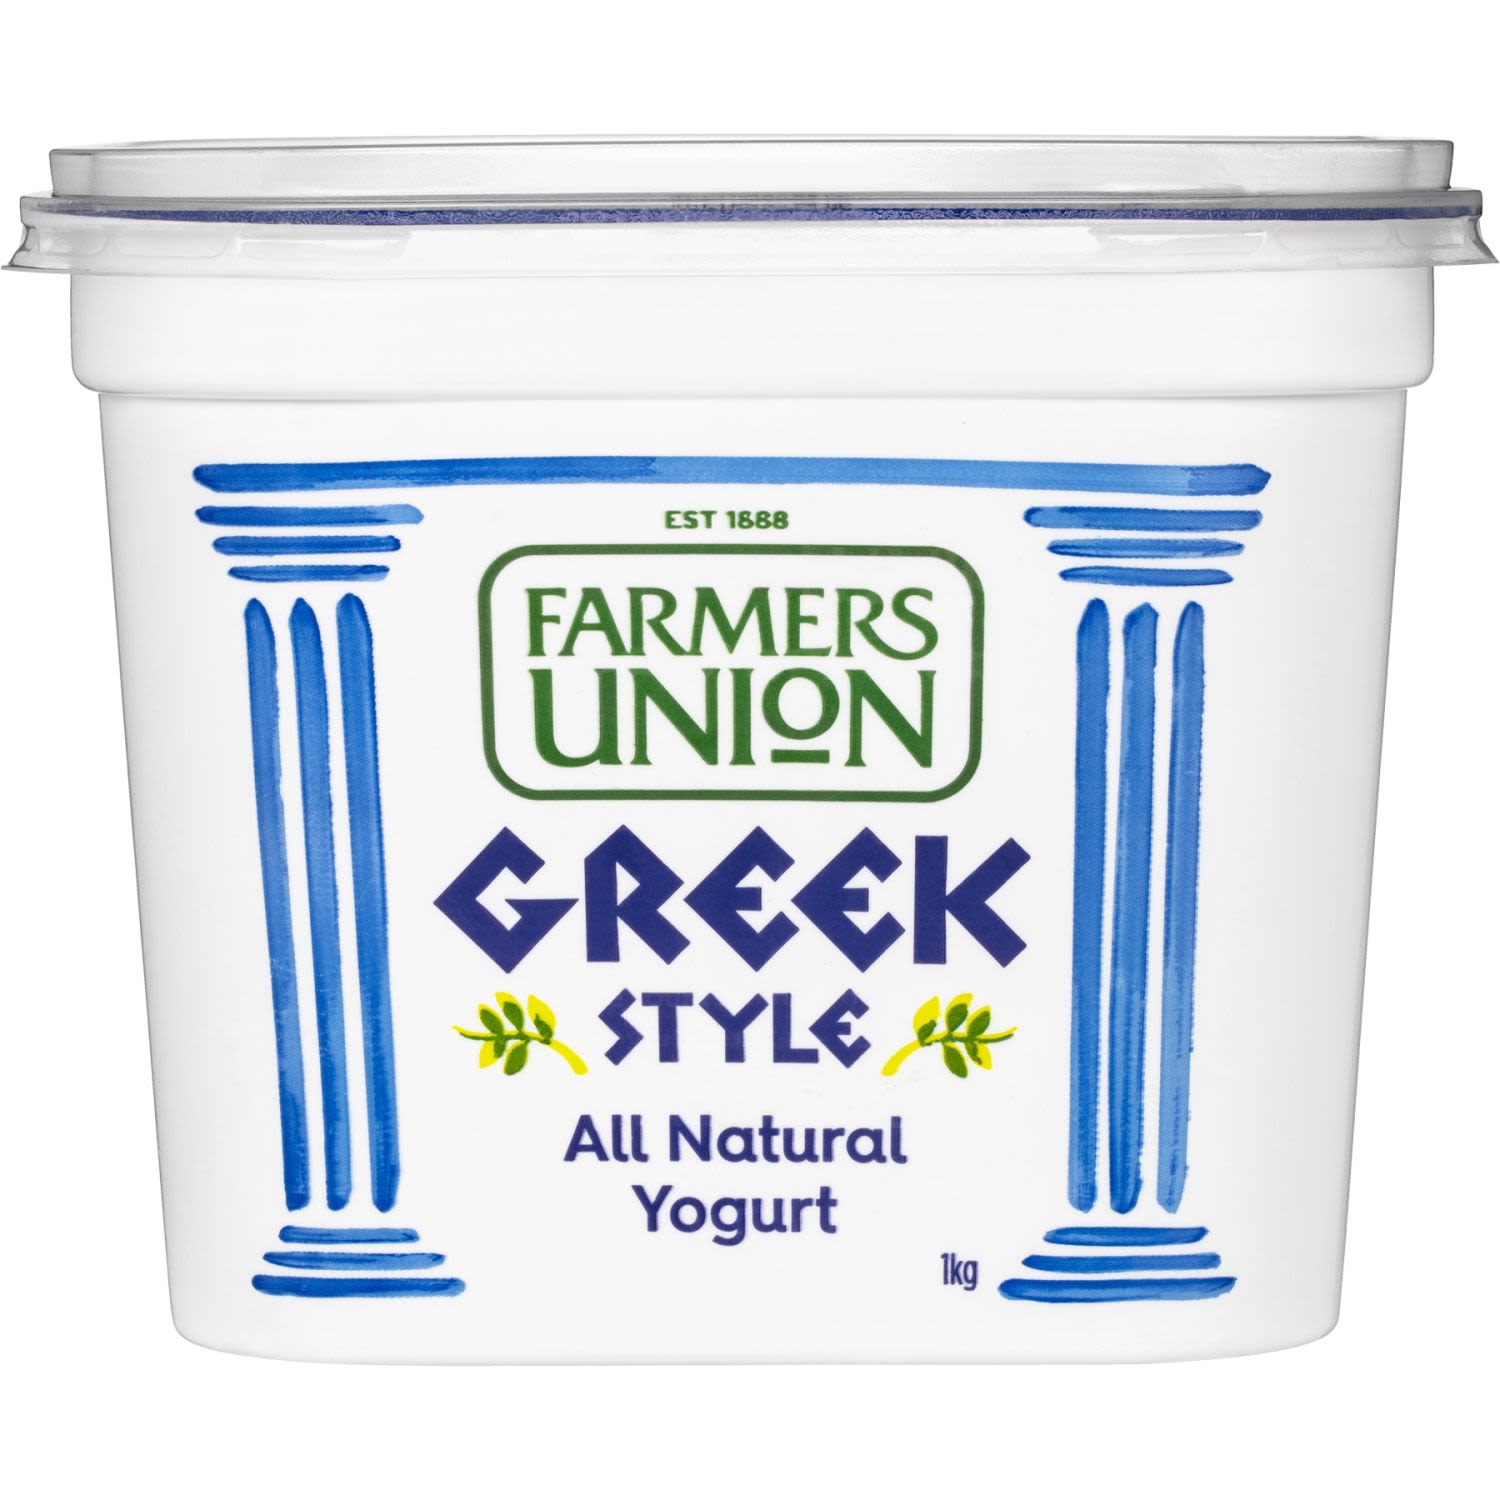 Farmers Union Greek Style Yoghurt, 1 Kilogram